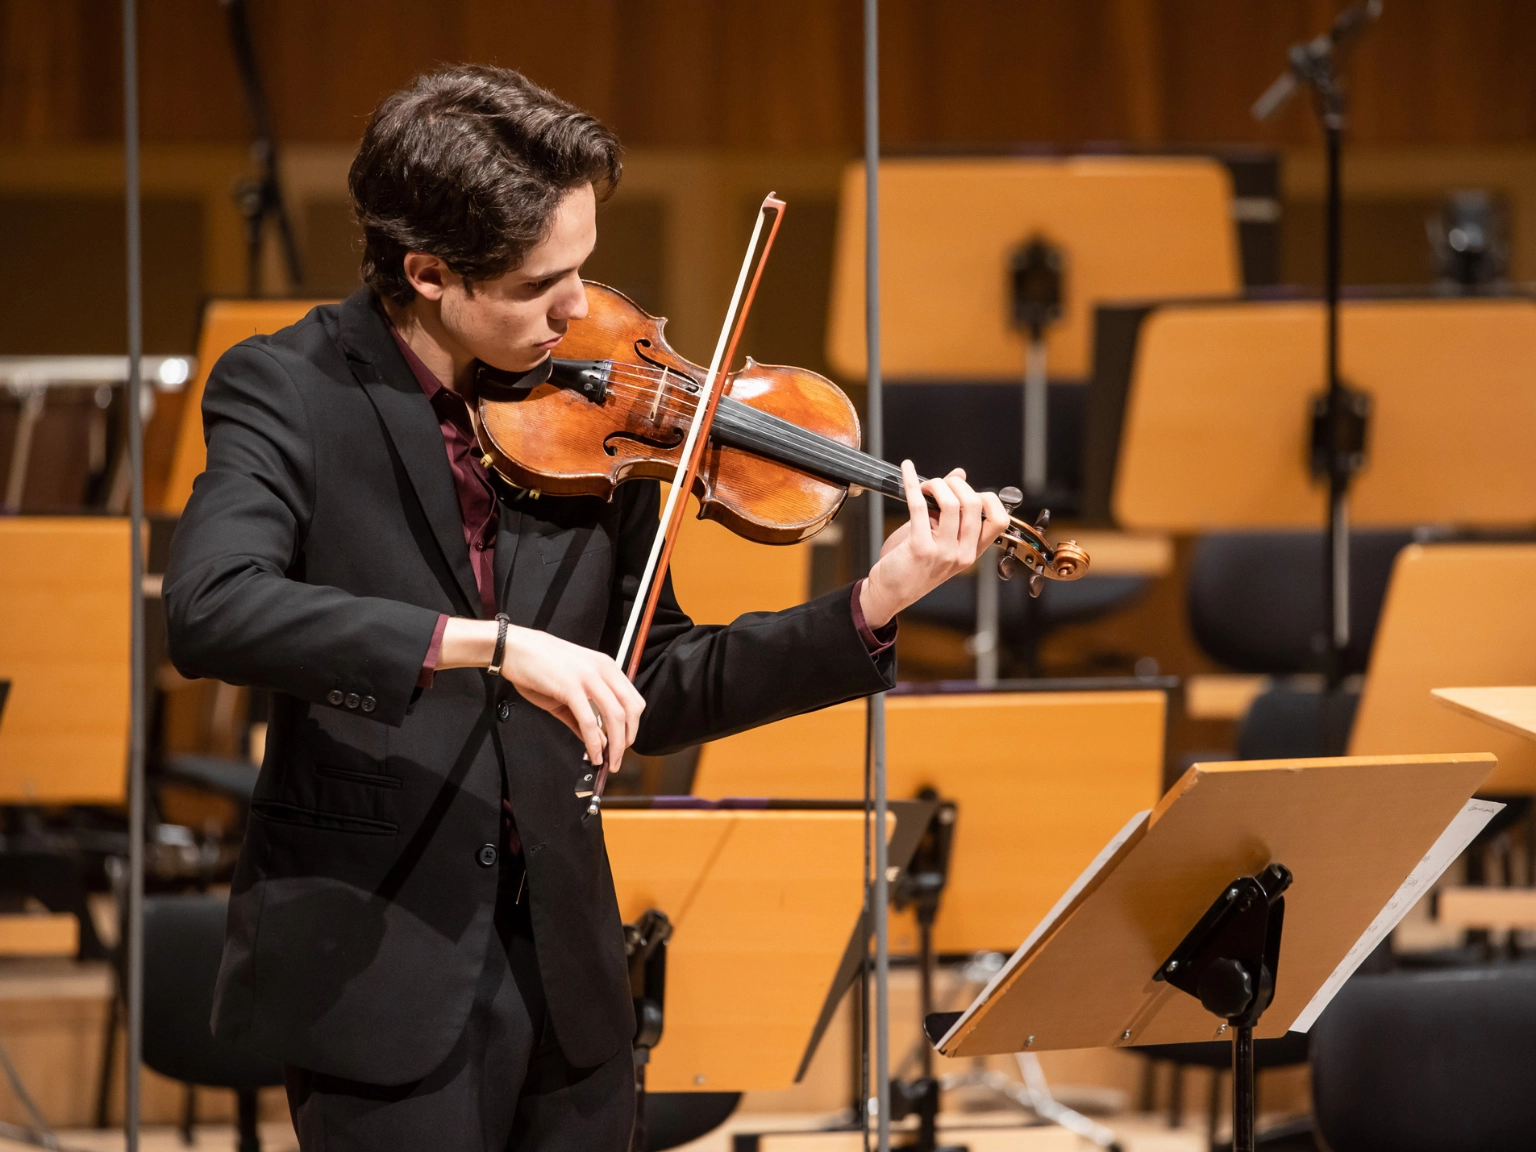 Joseph Joachim Violinwettbewerb 2021: Konzert Javier Comesaña, Finale am 10.10.2021